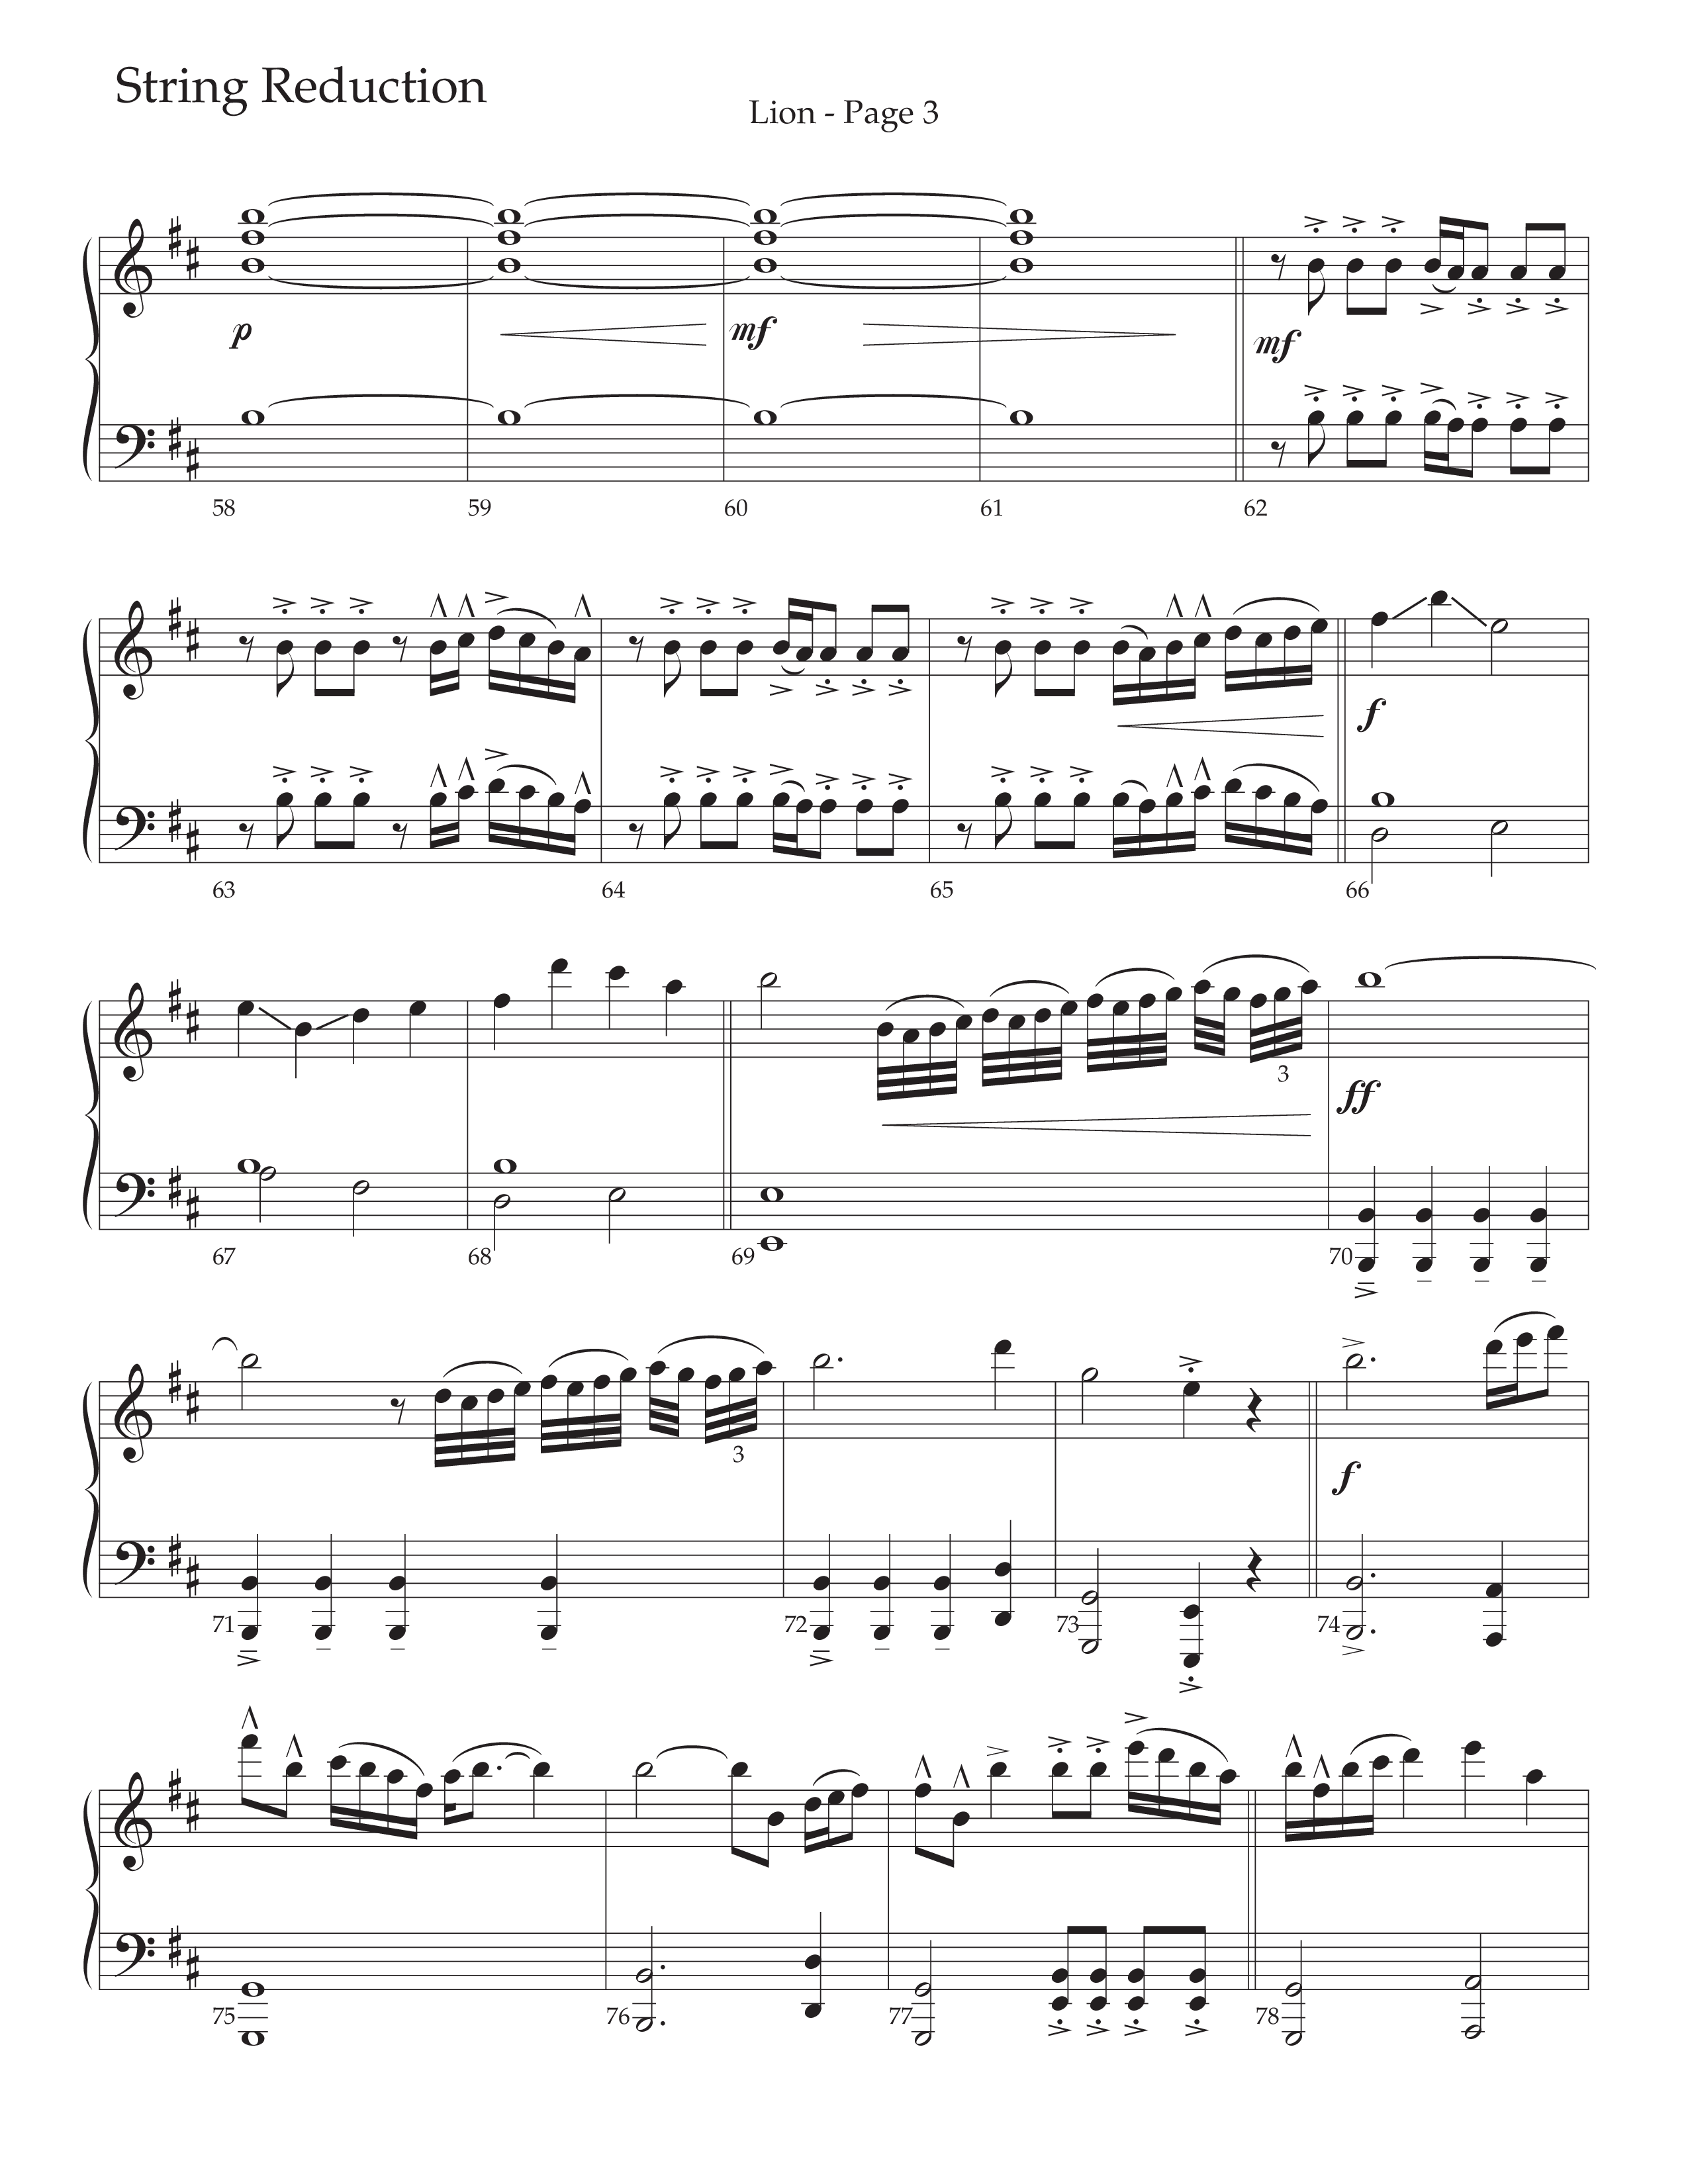 LION (Choral Anthem SATB) String Reduction (Daywind Worship / Arr. Phil Nitz)